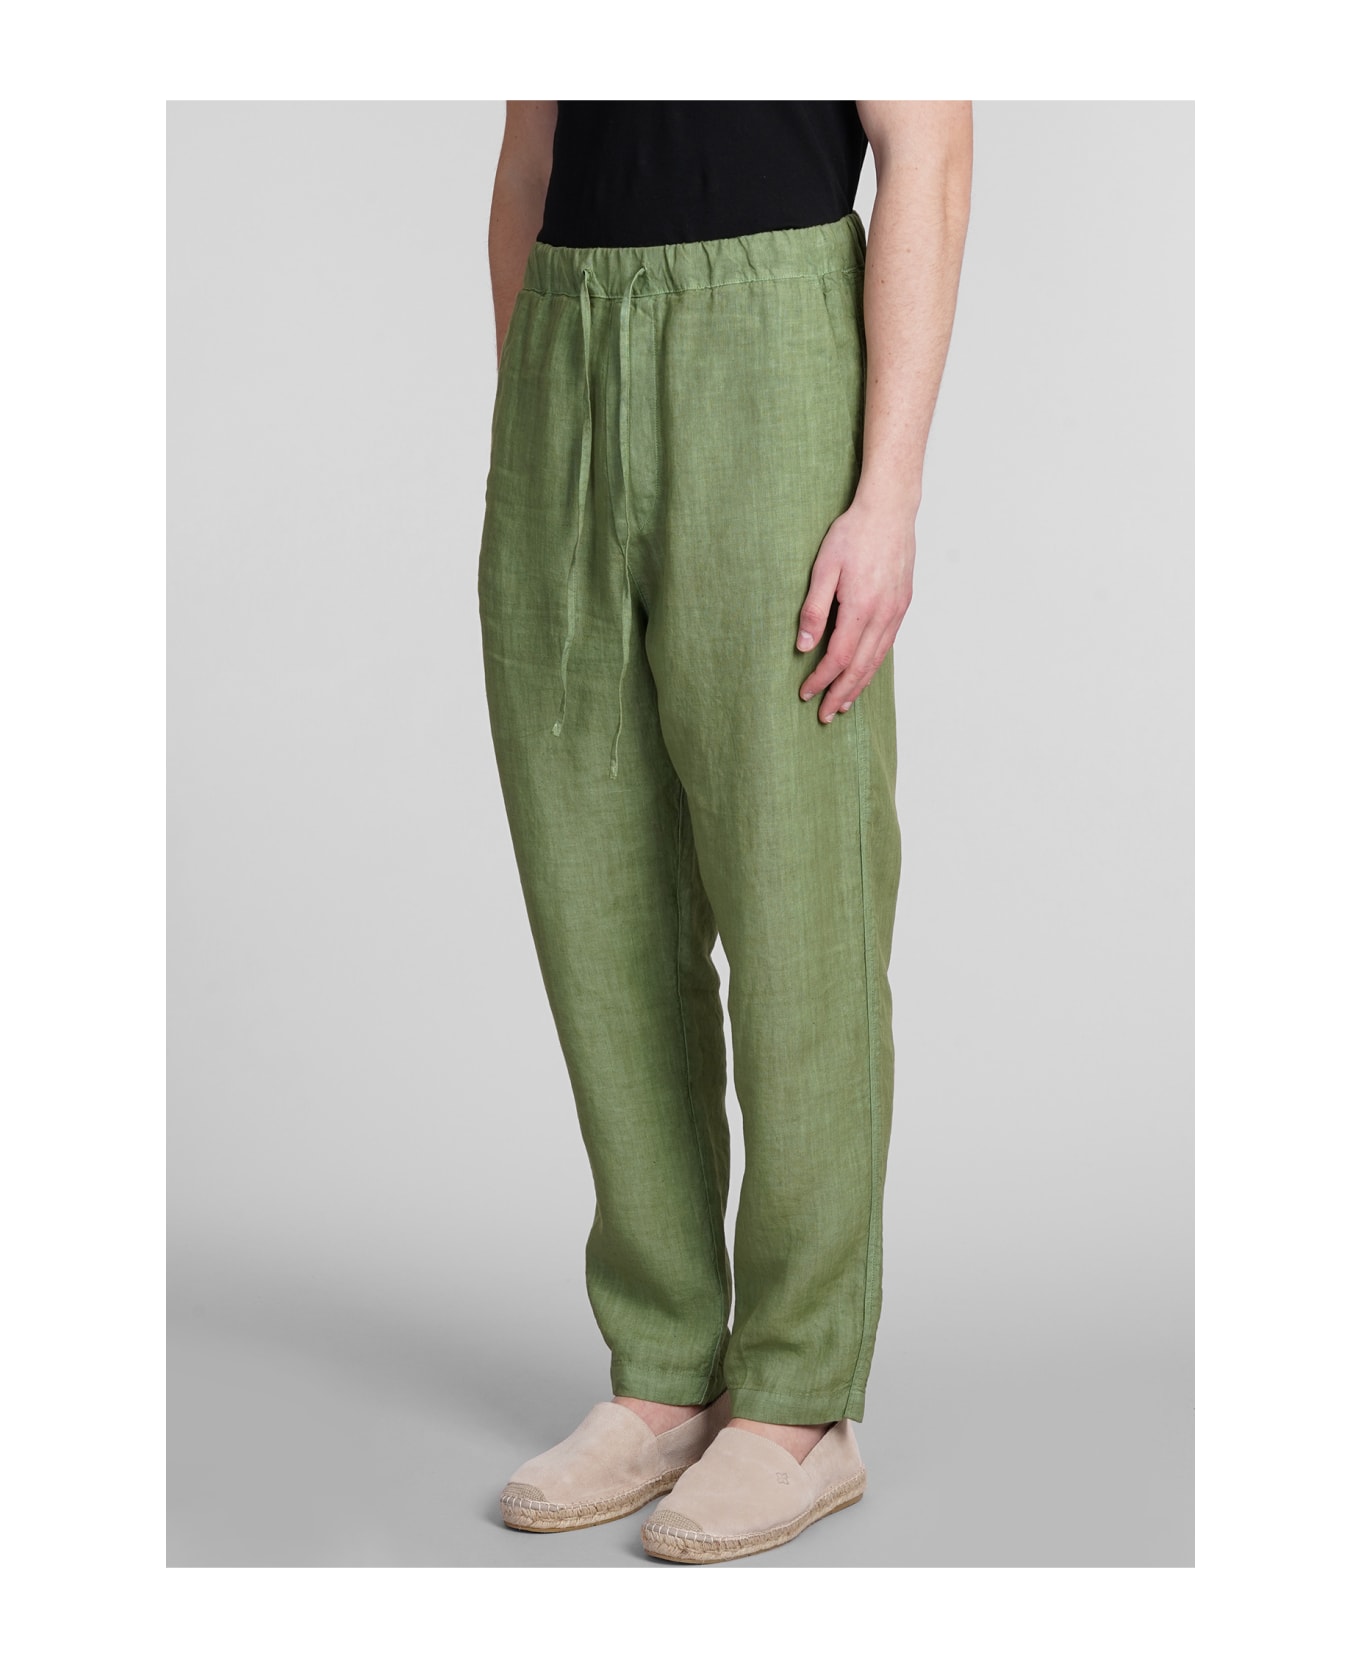 120% Lino Pants In Green Linen - Medium green soft ボトムス